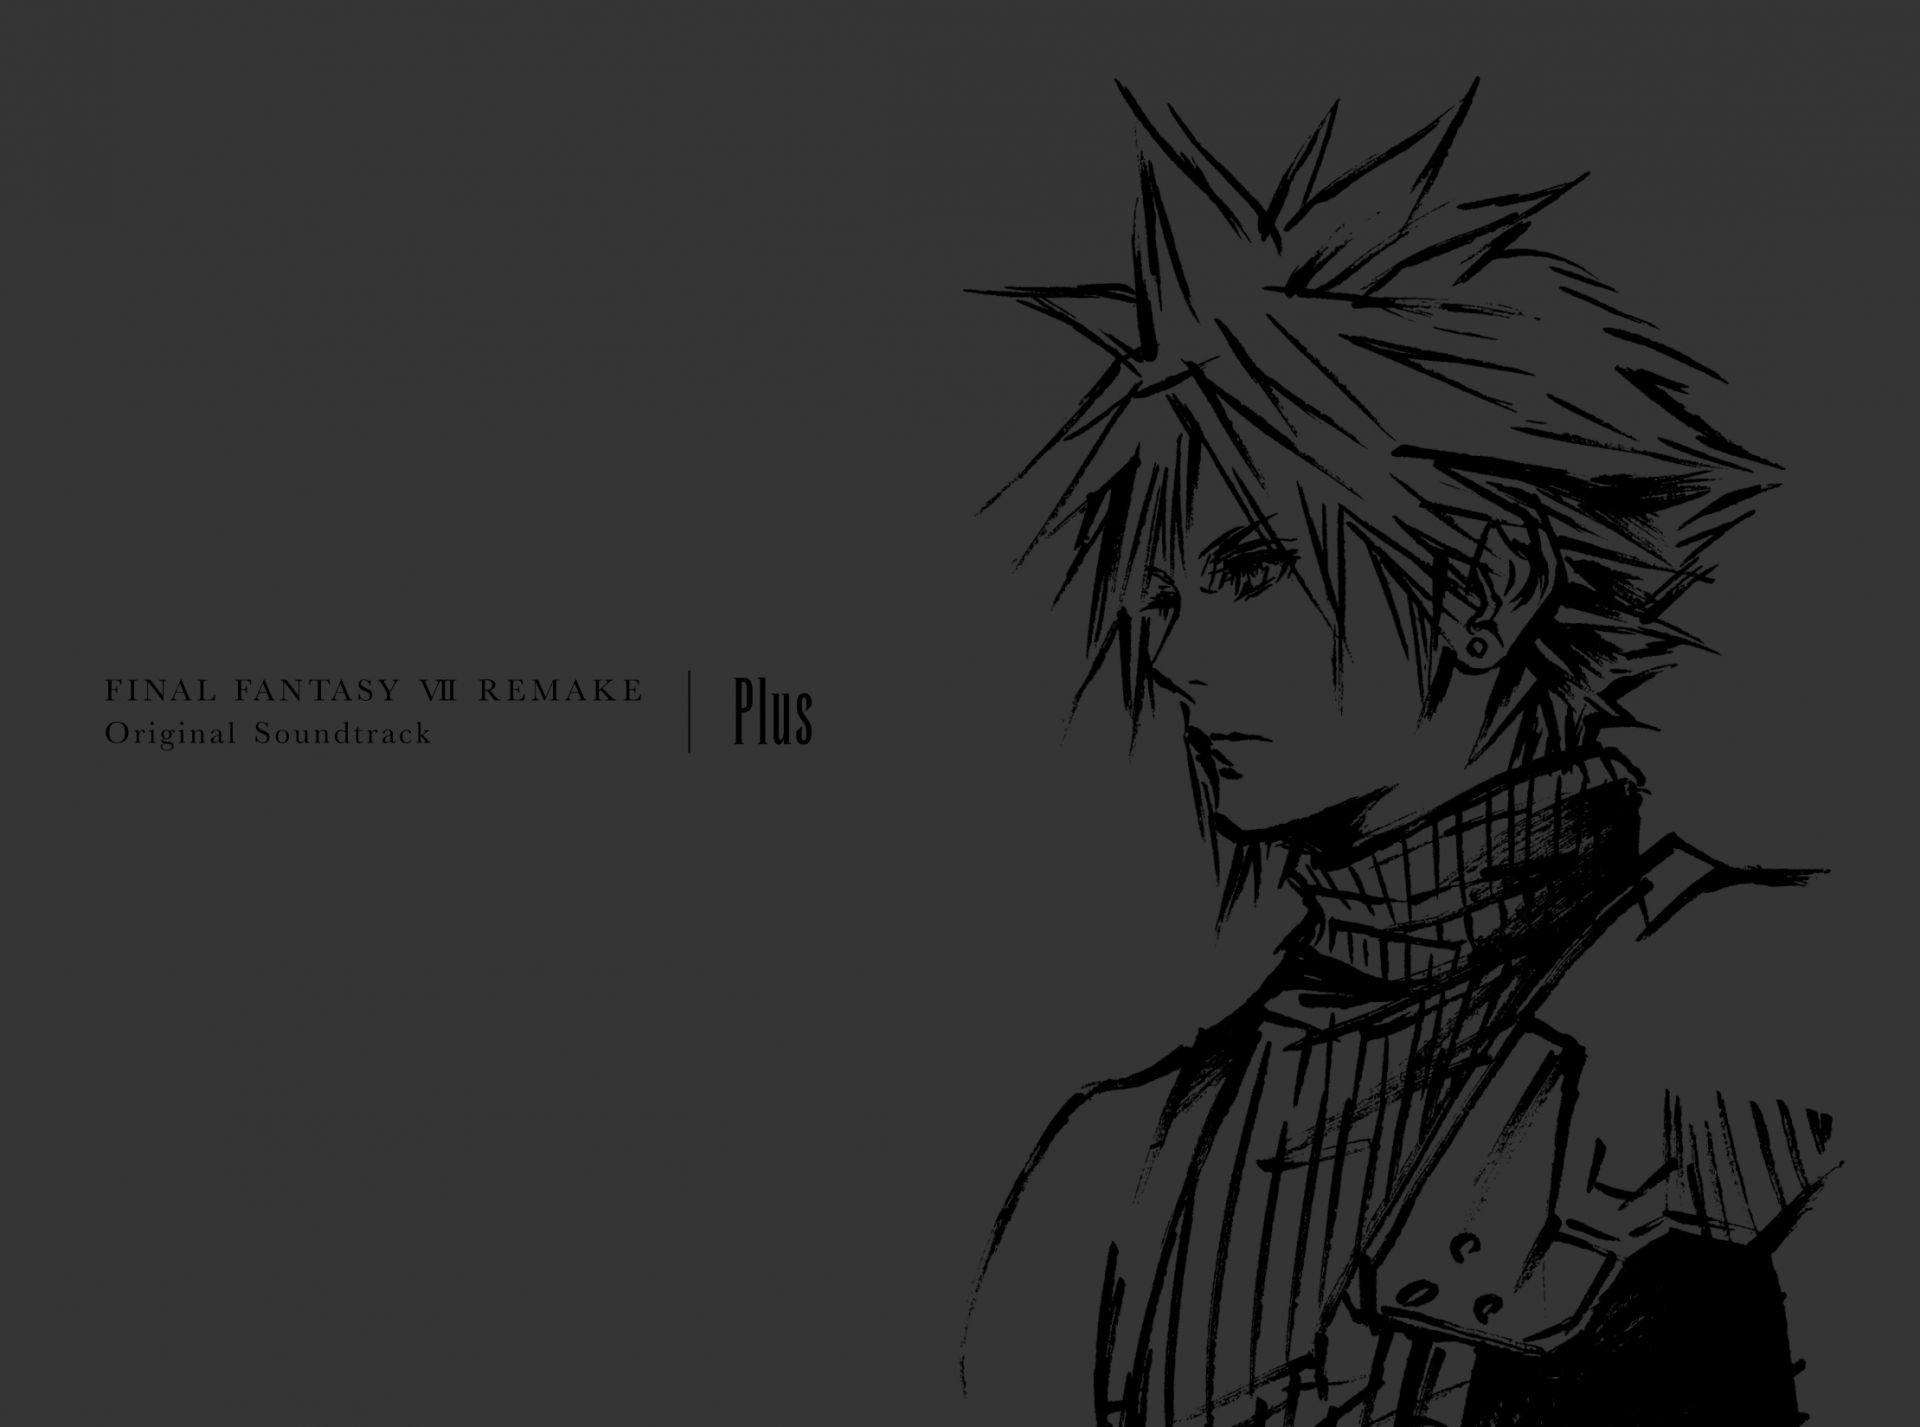 FINAL FANTASY VII REMAKE Original Soundtrack Plus [CD] | Square Enix Store